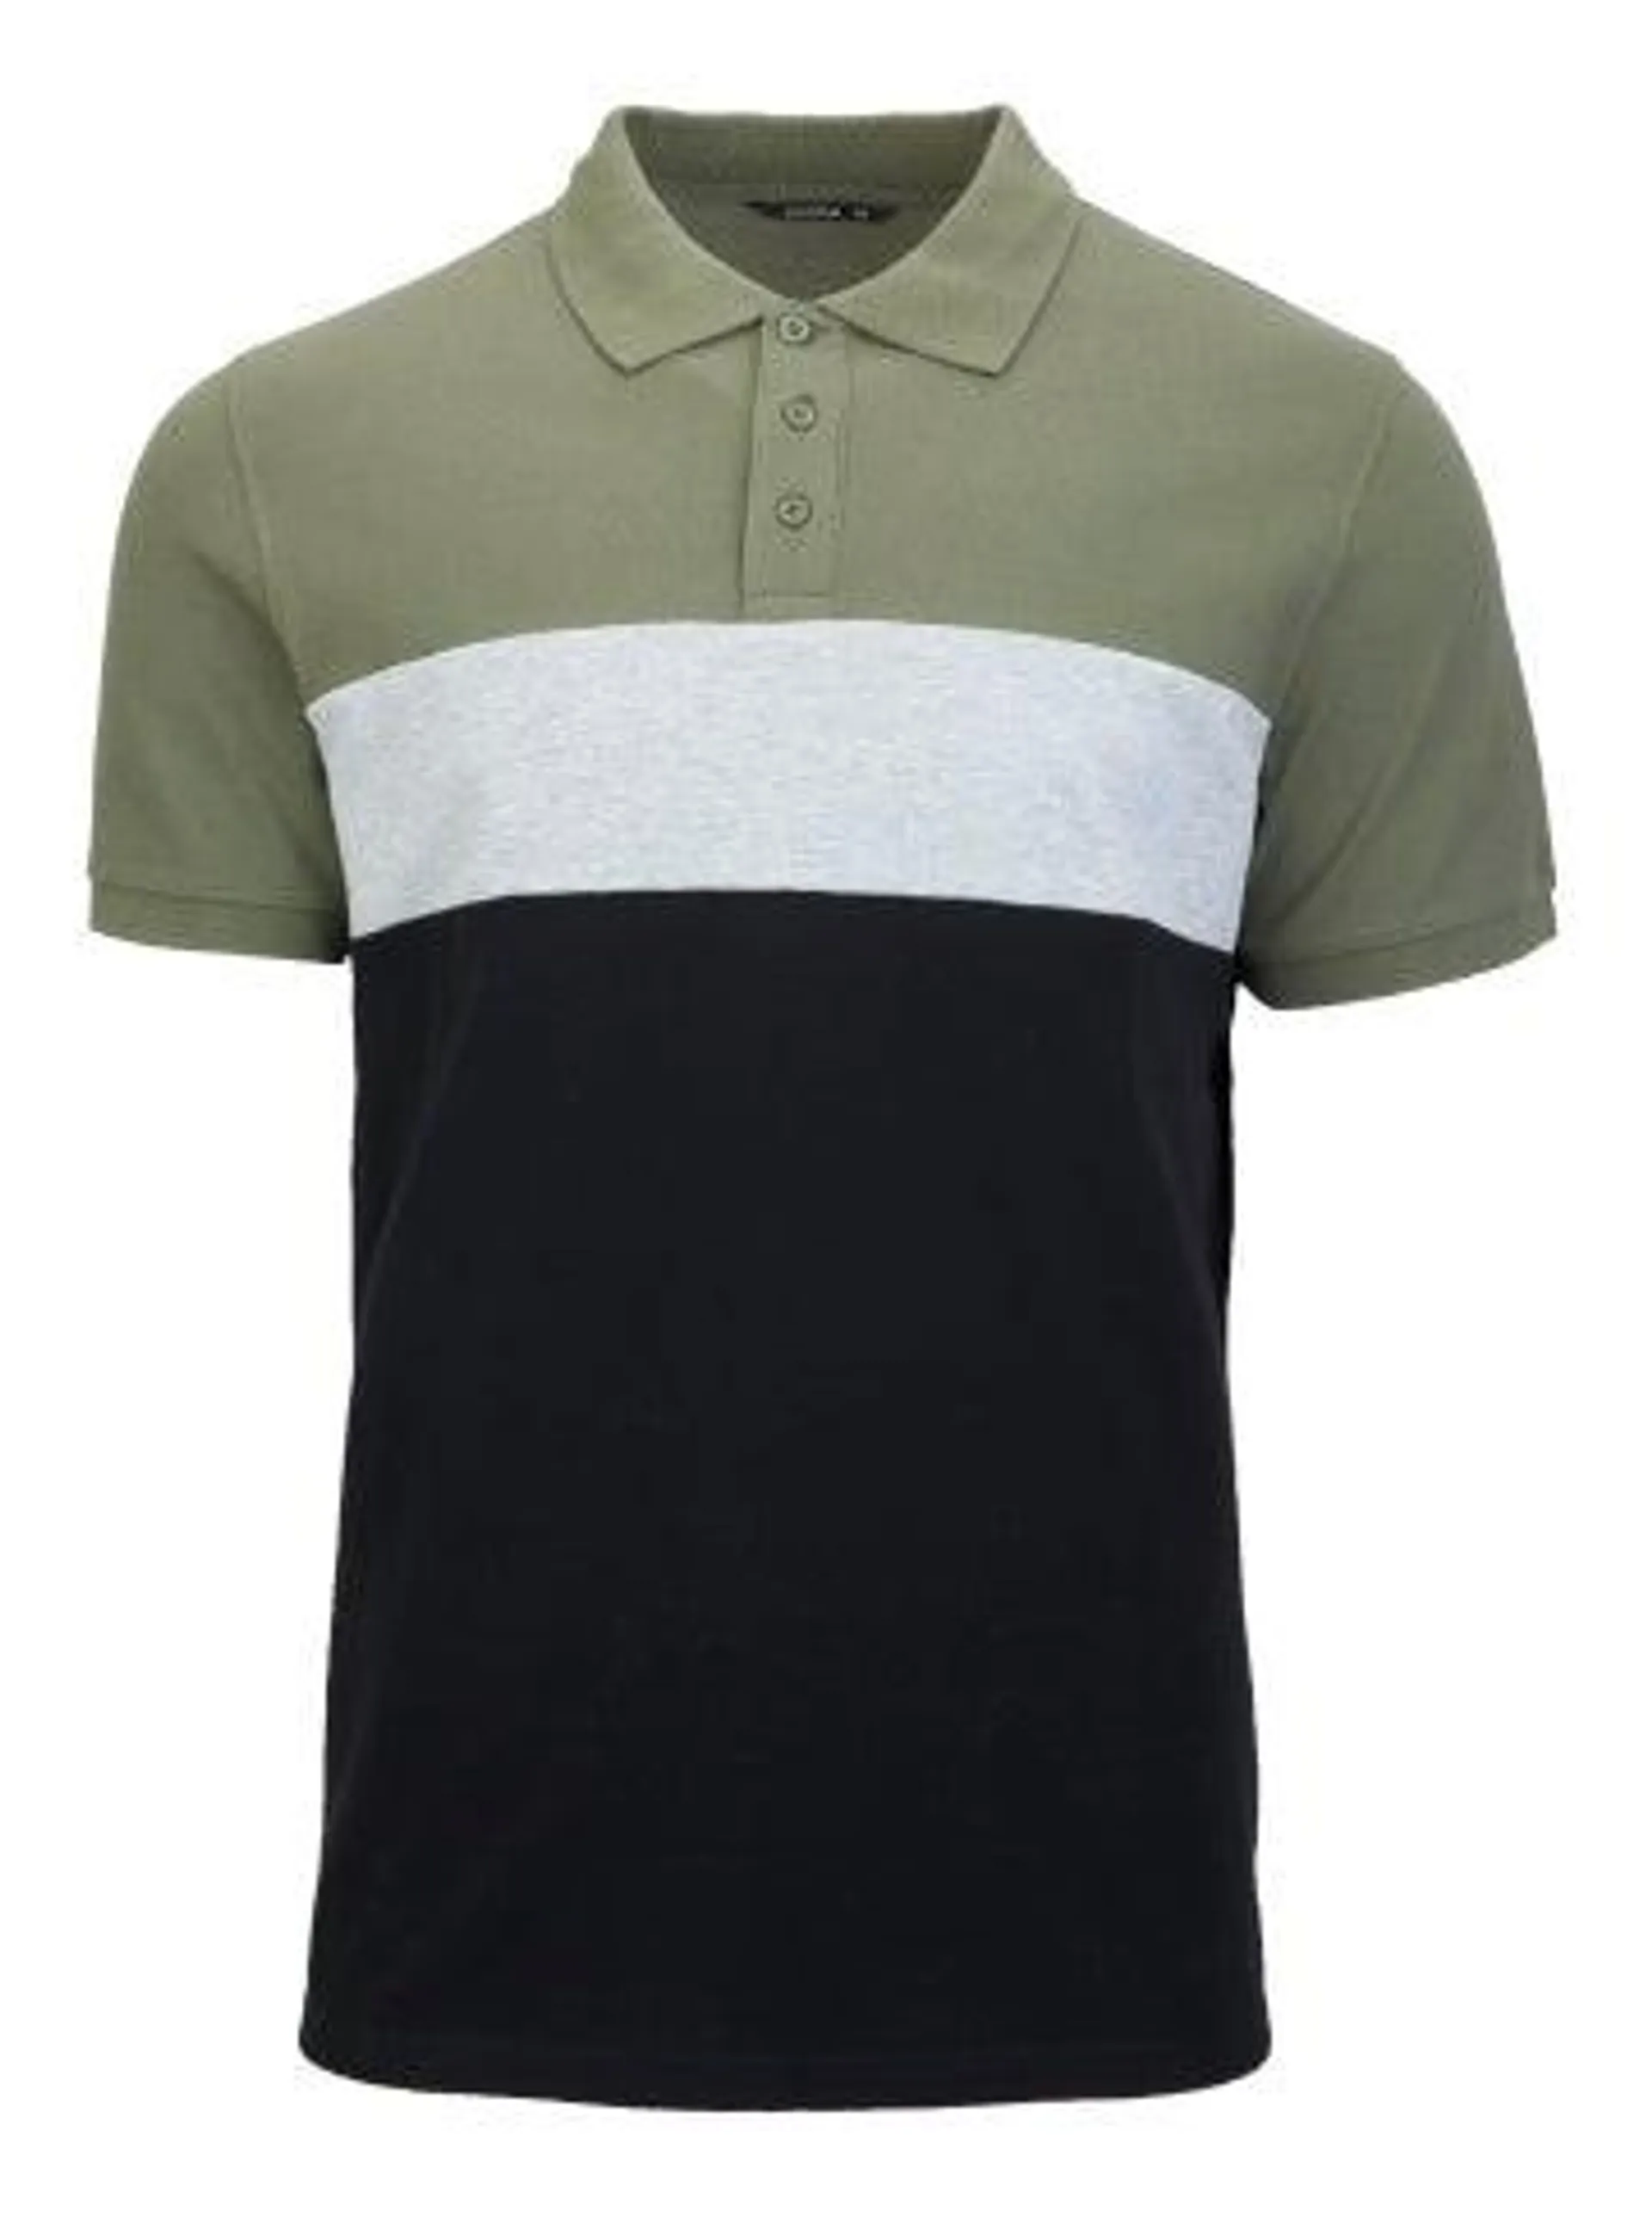 Men's Colour Block Polo in Khaki/grey Marle/black